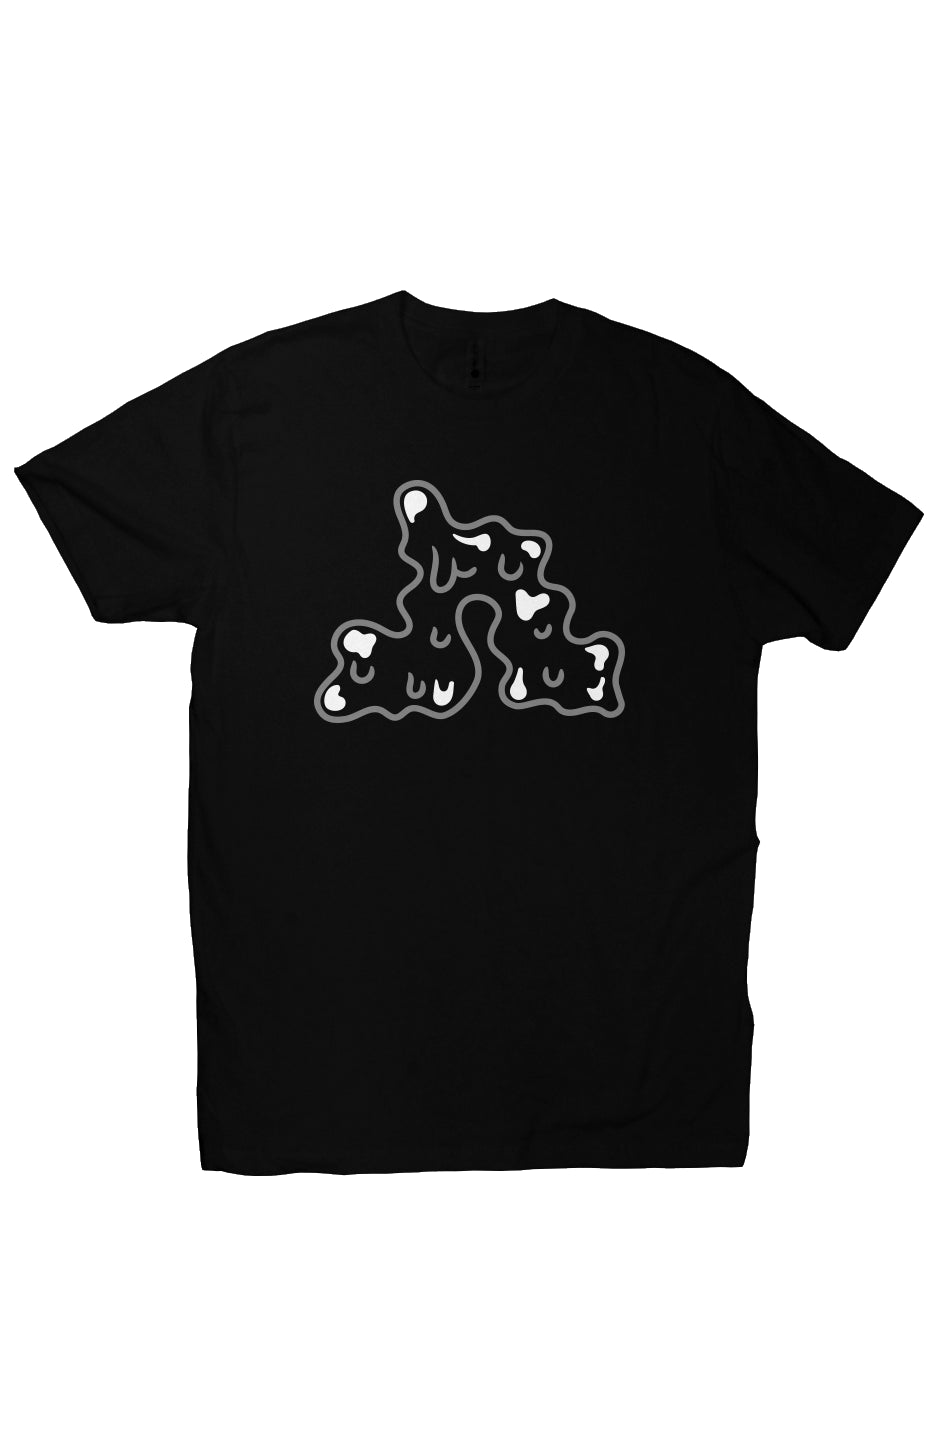 PURE Solo premium t-shirt black, black, grey, and white.